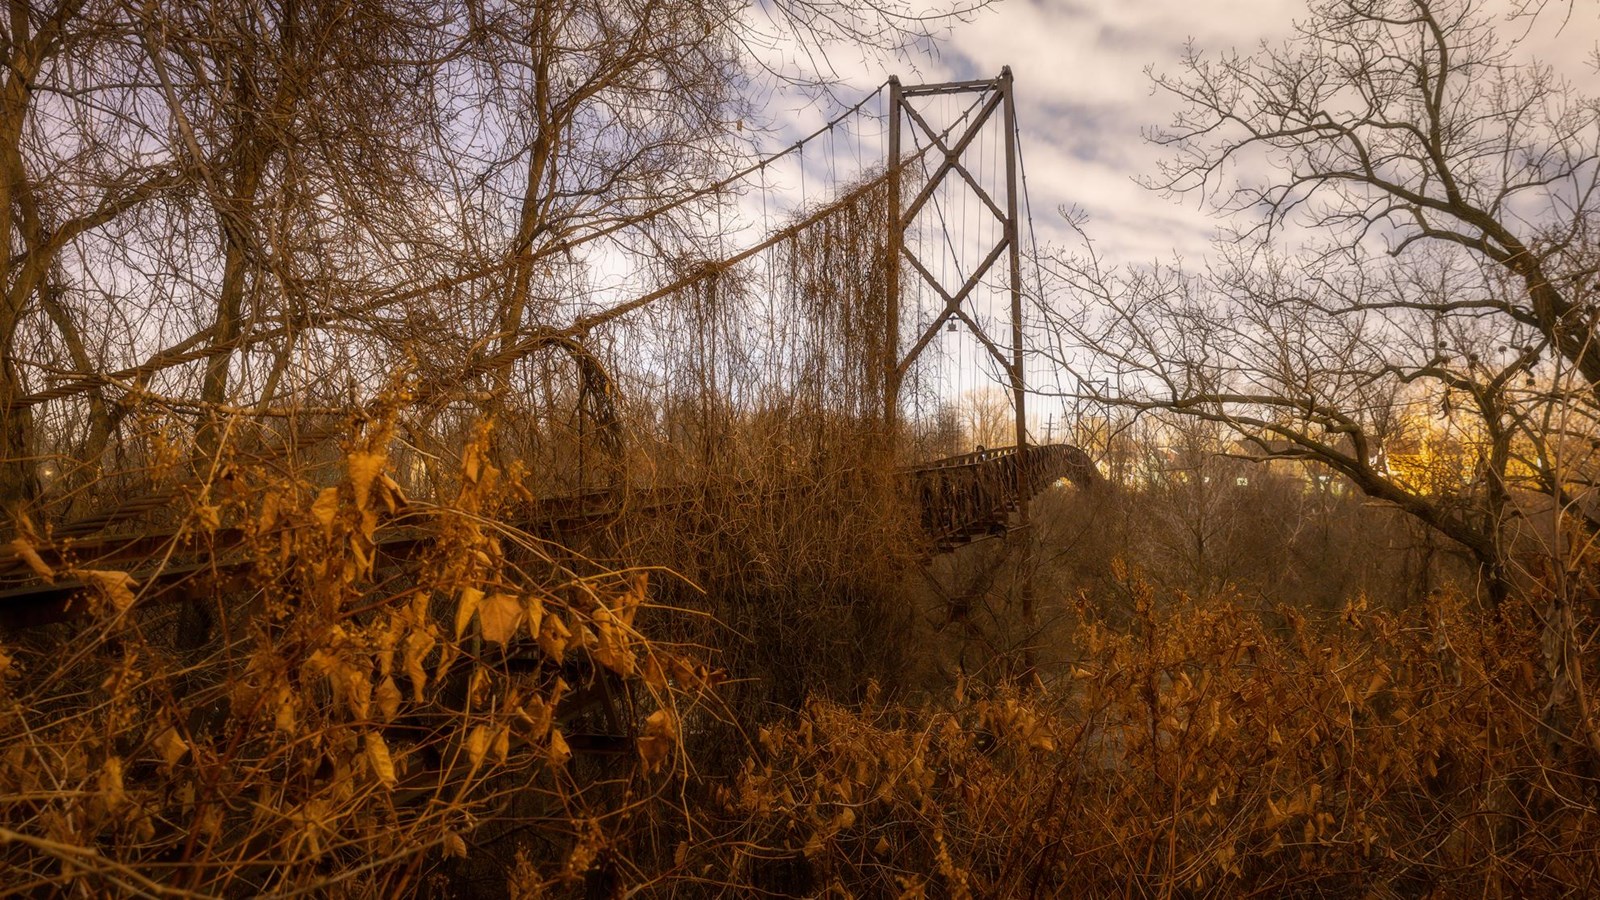 Pedestrian suspension bridge surrounded by overgrown autumnal field